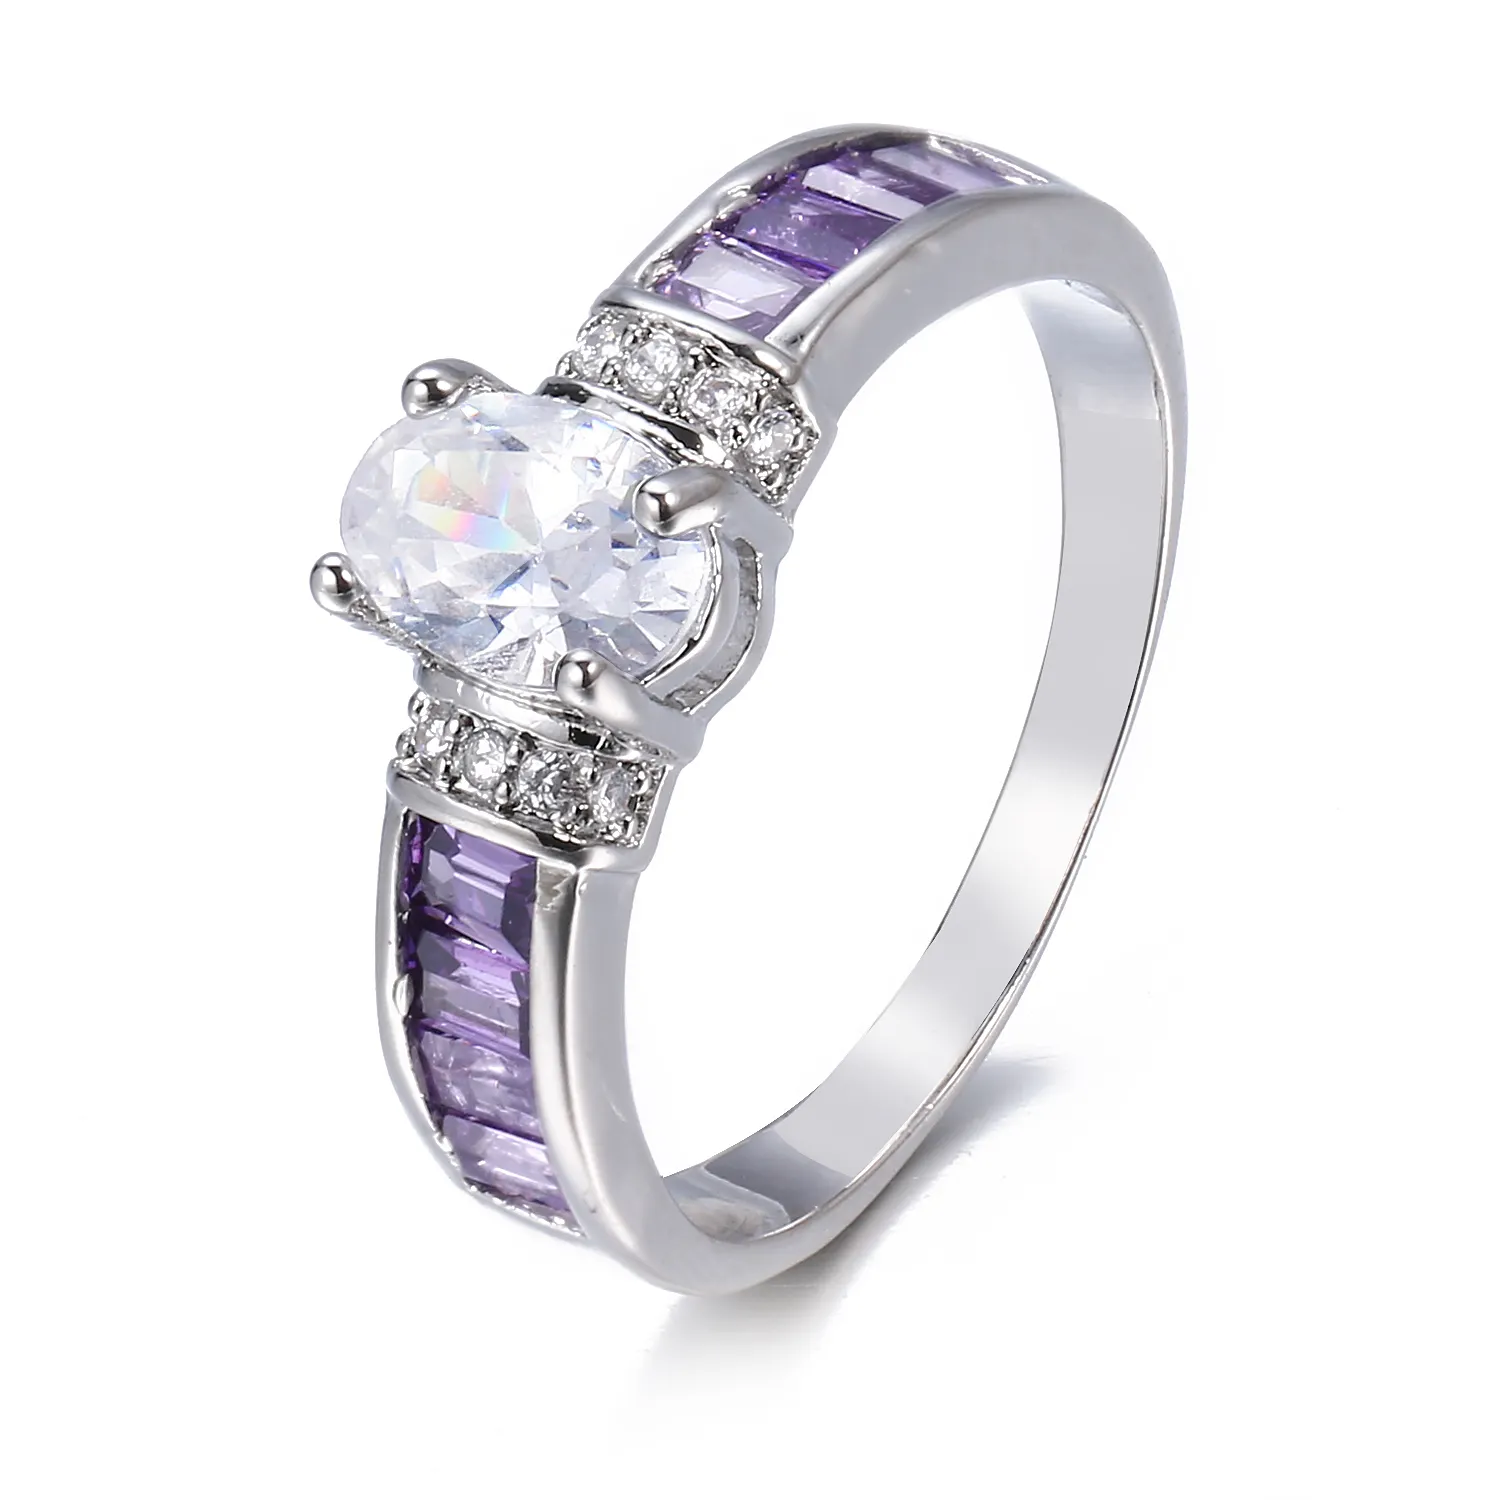 Emmaya New Design Jewelry Purple Crystal Genius Diamond Oval Gemstone Silver Plated Ring For Women Bridal Wedding Party Gift